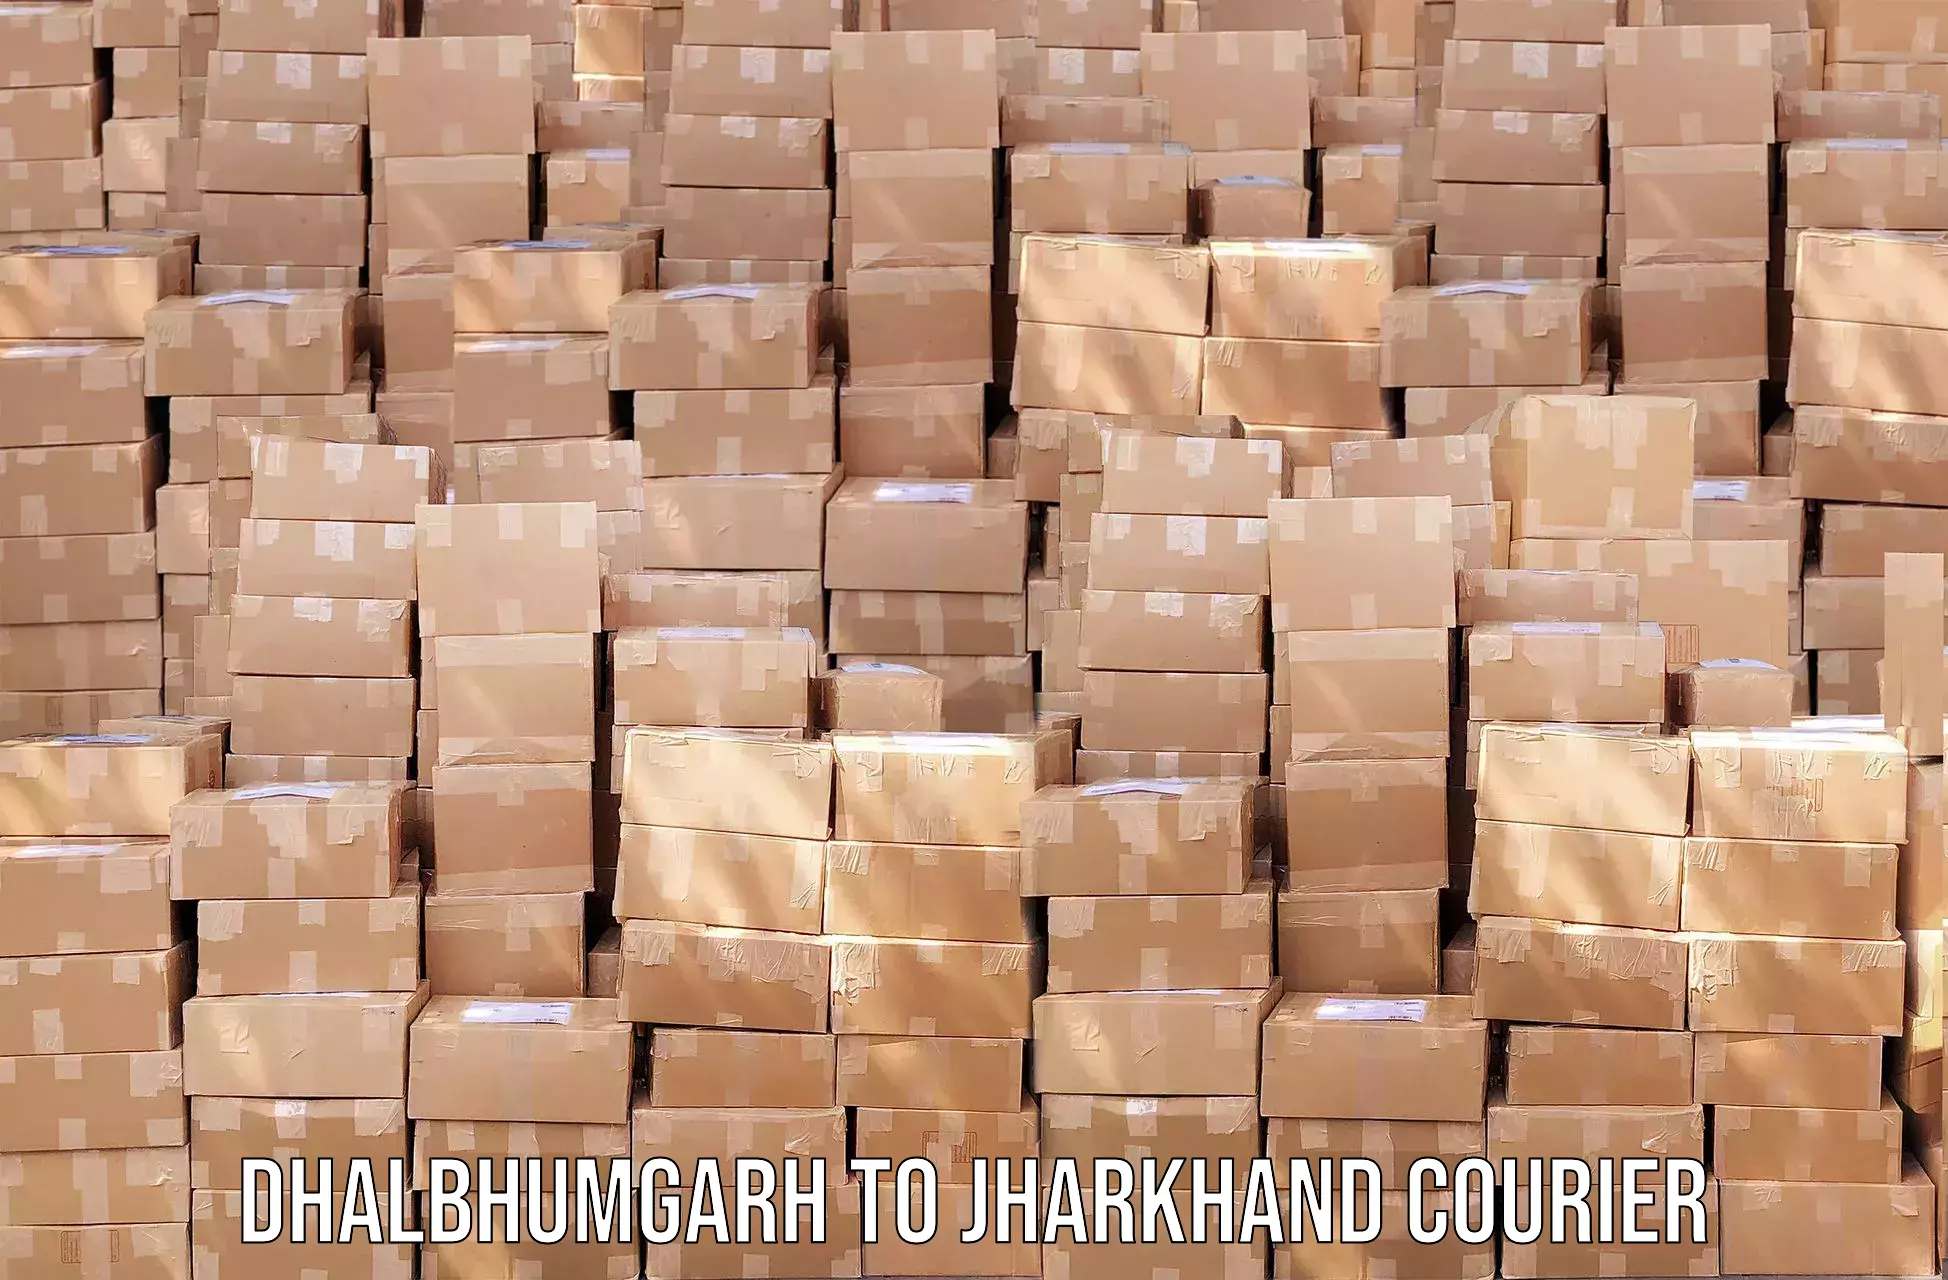 Nationwide shipping coverage Dhalbhumgarh to Ranchi